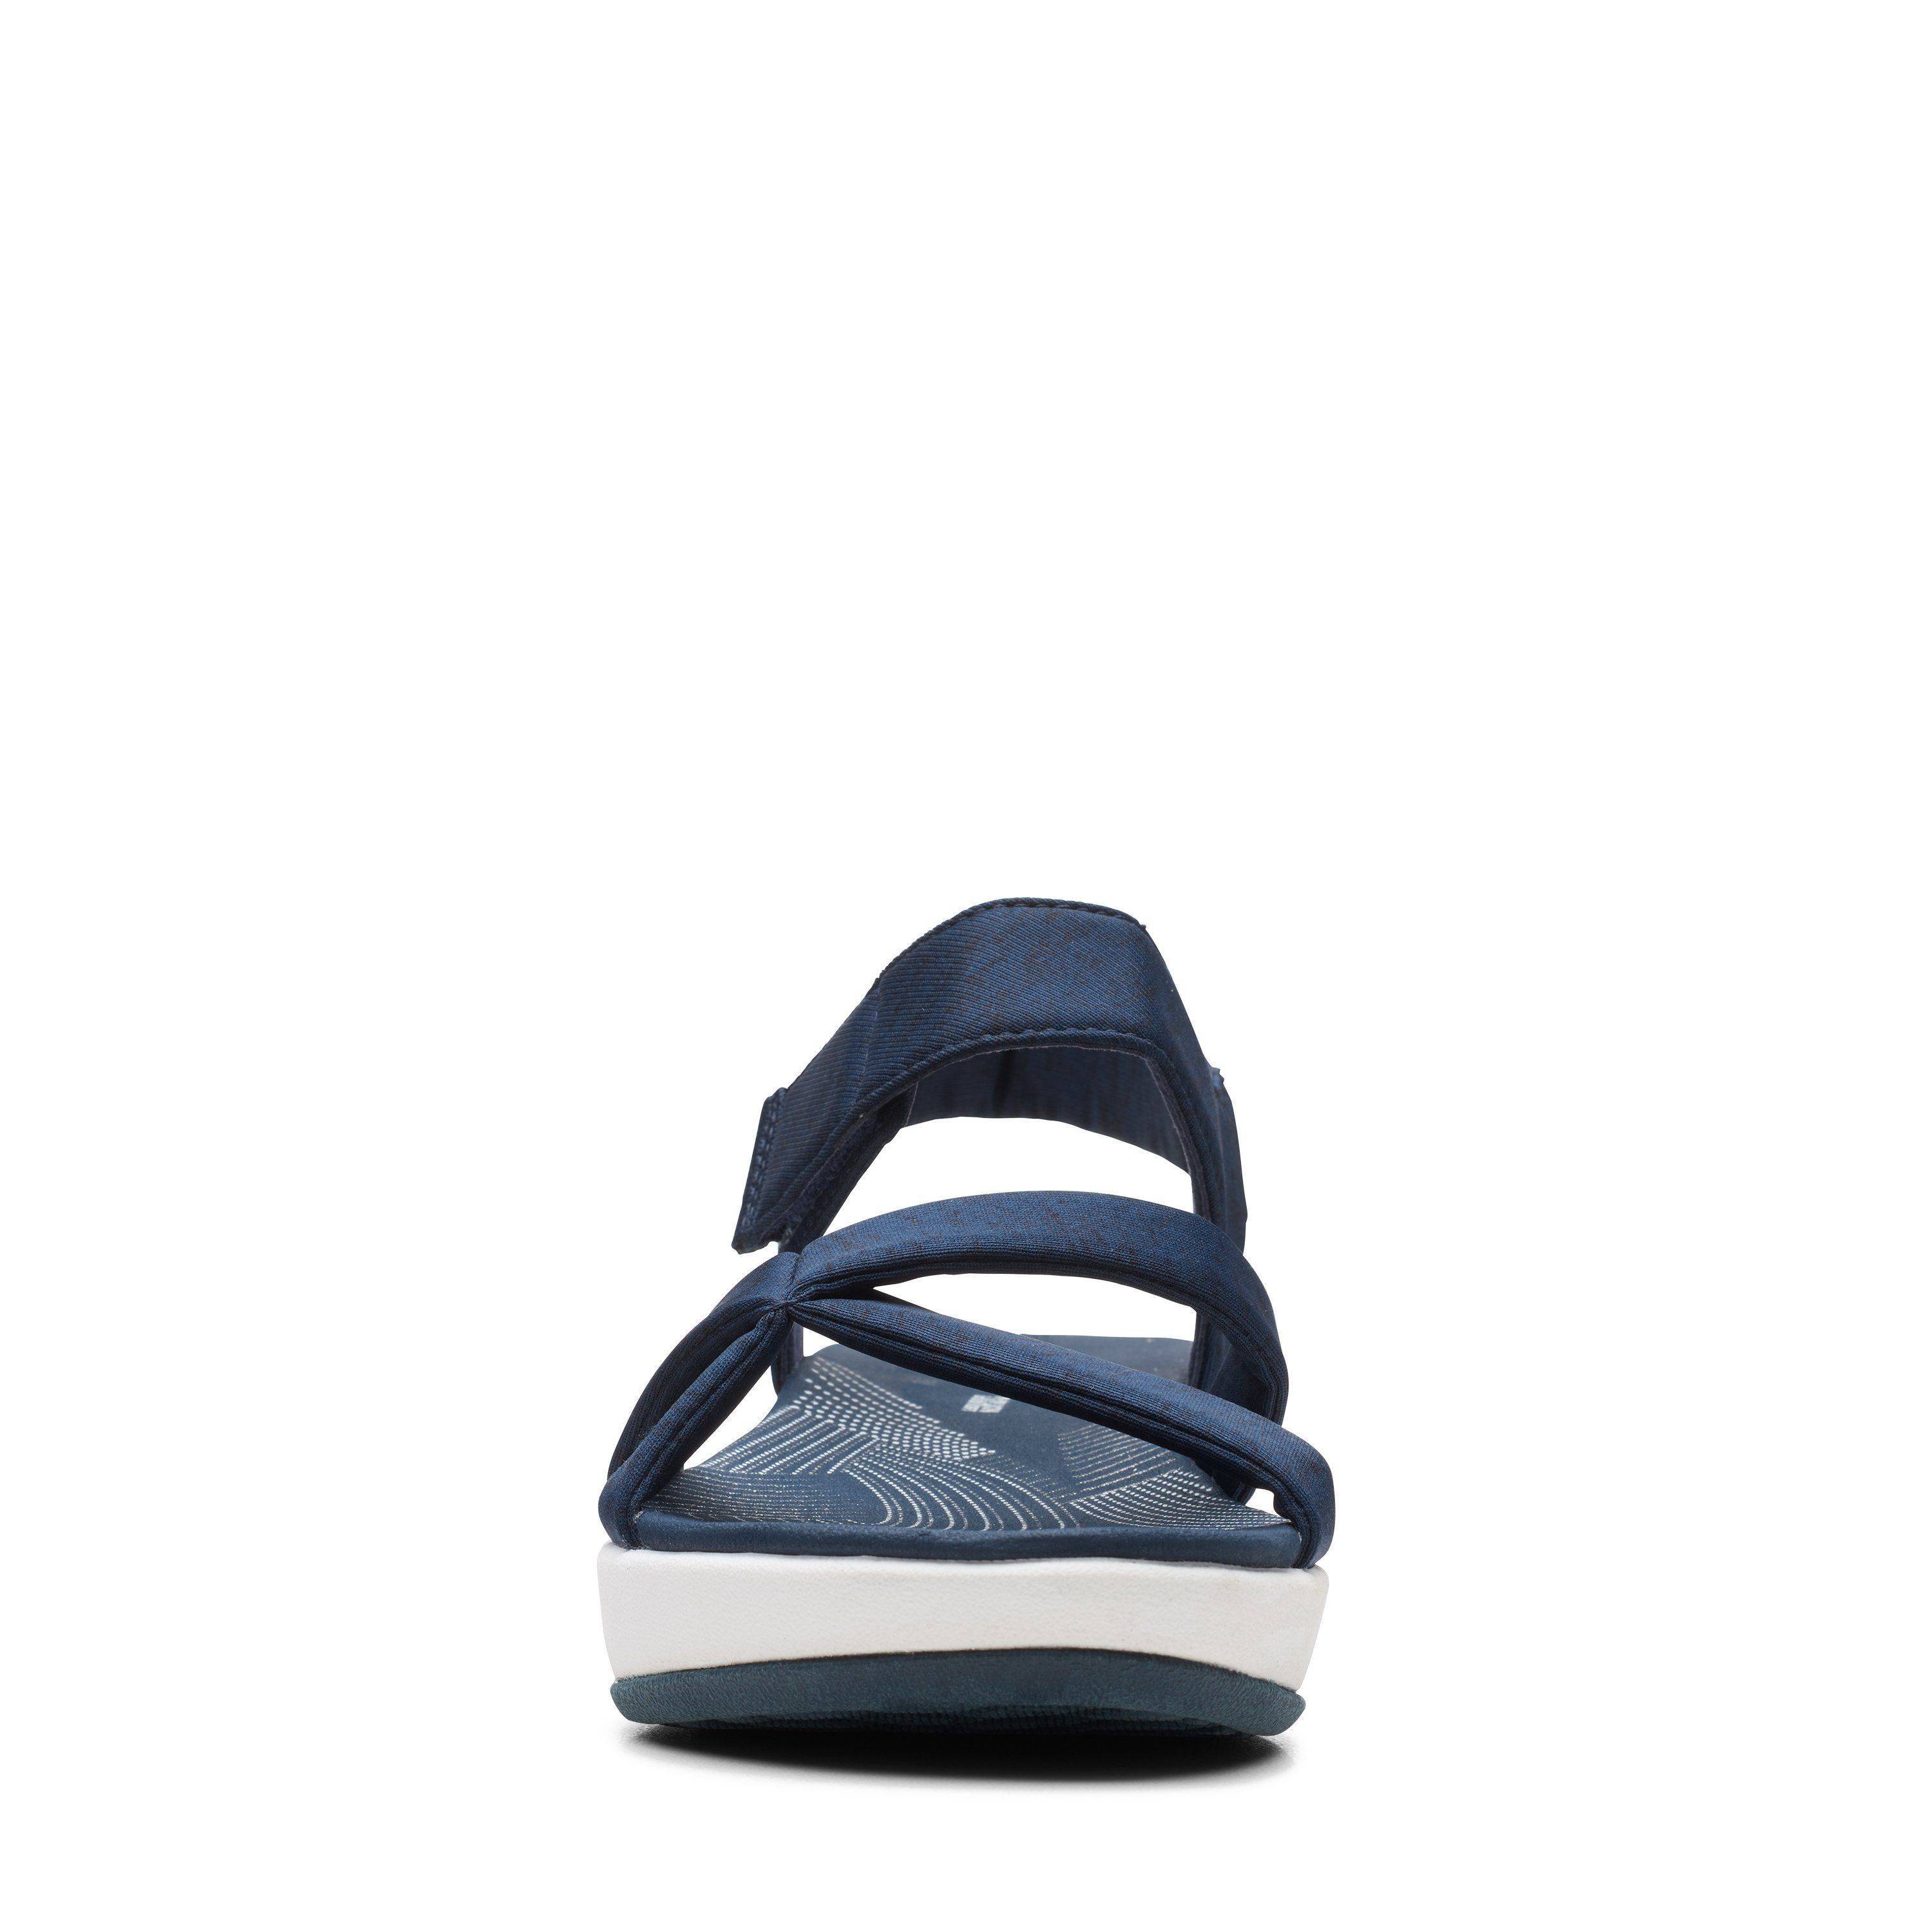 Женские сандалии Clarks, синие, цвет синий, размер 40 - фото 3